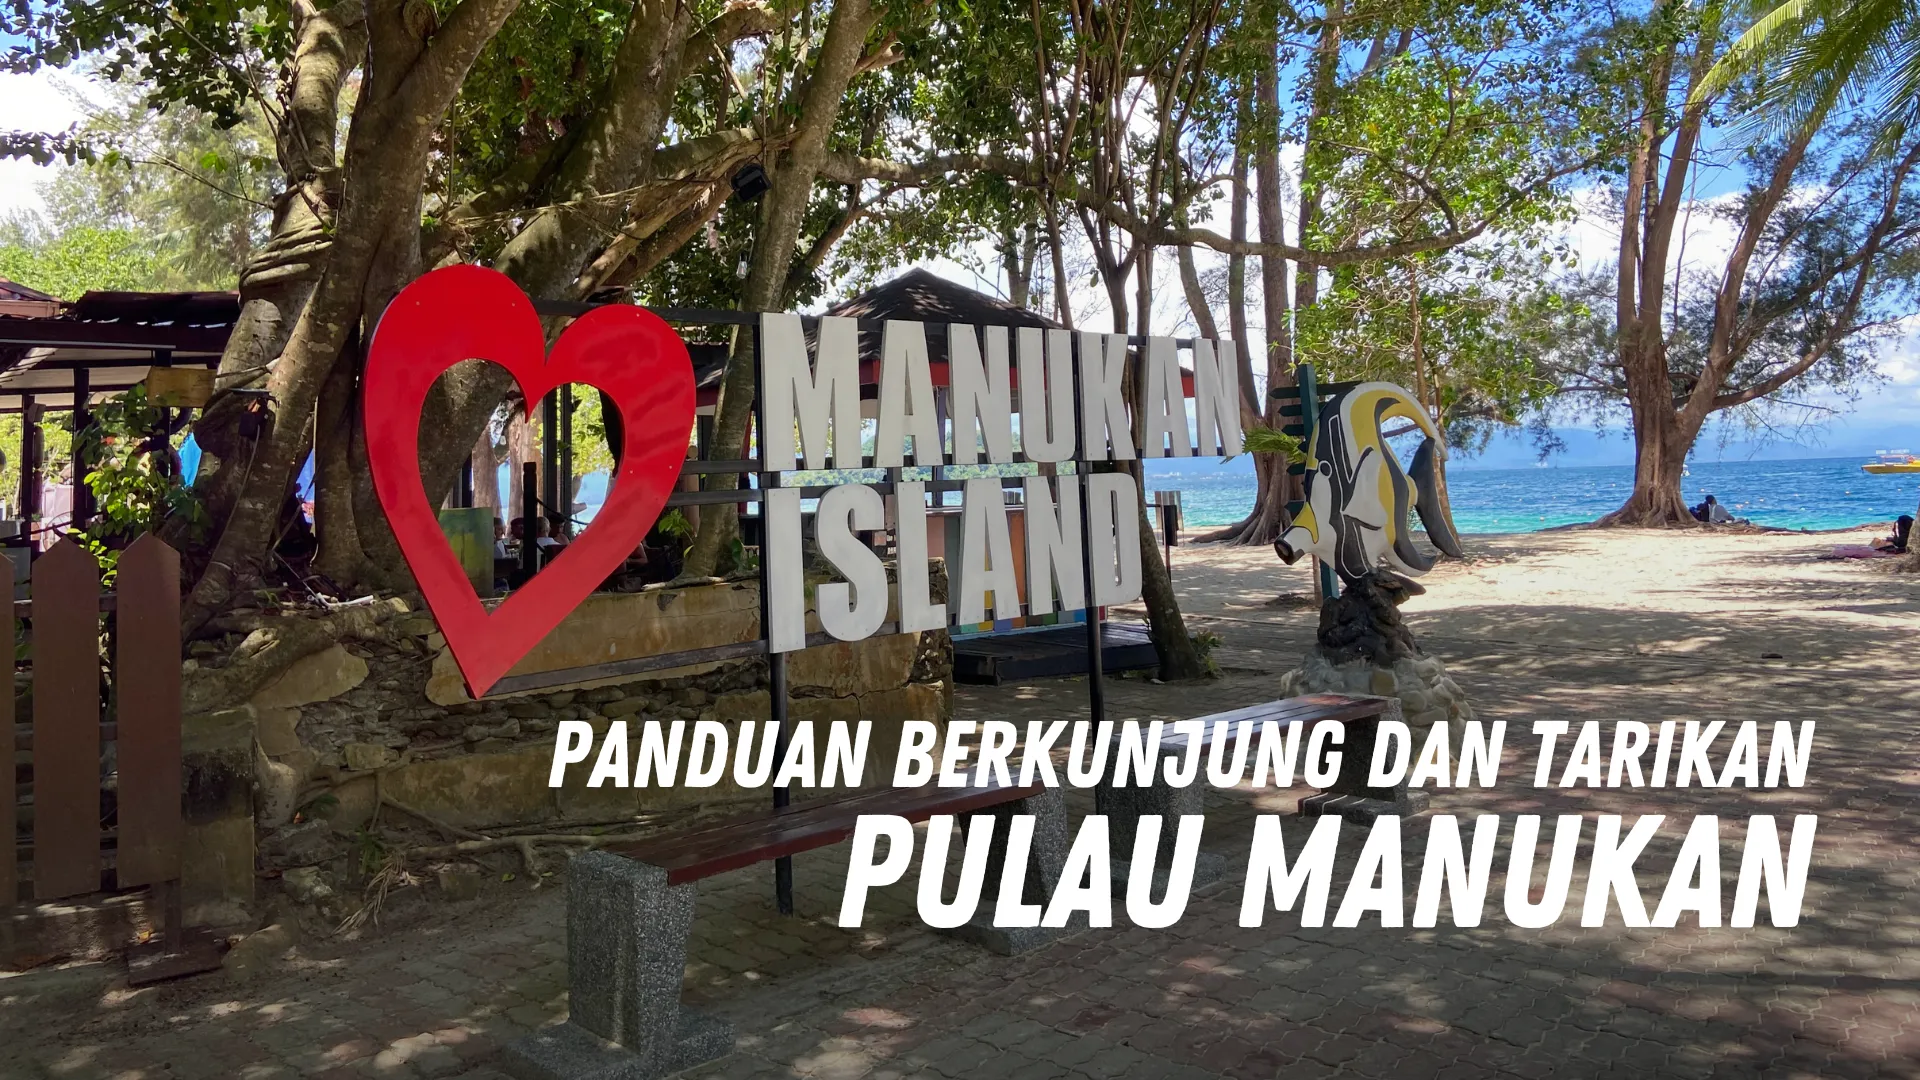 Review Pulau Manukan Malaysia